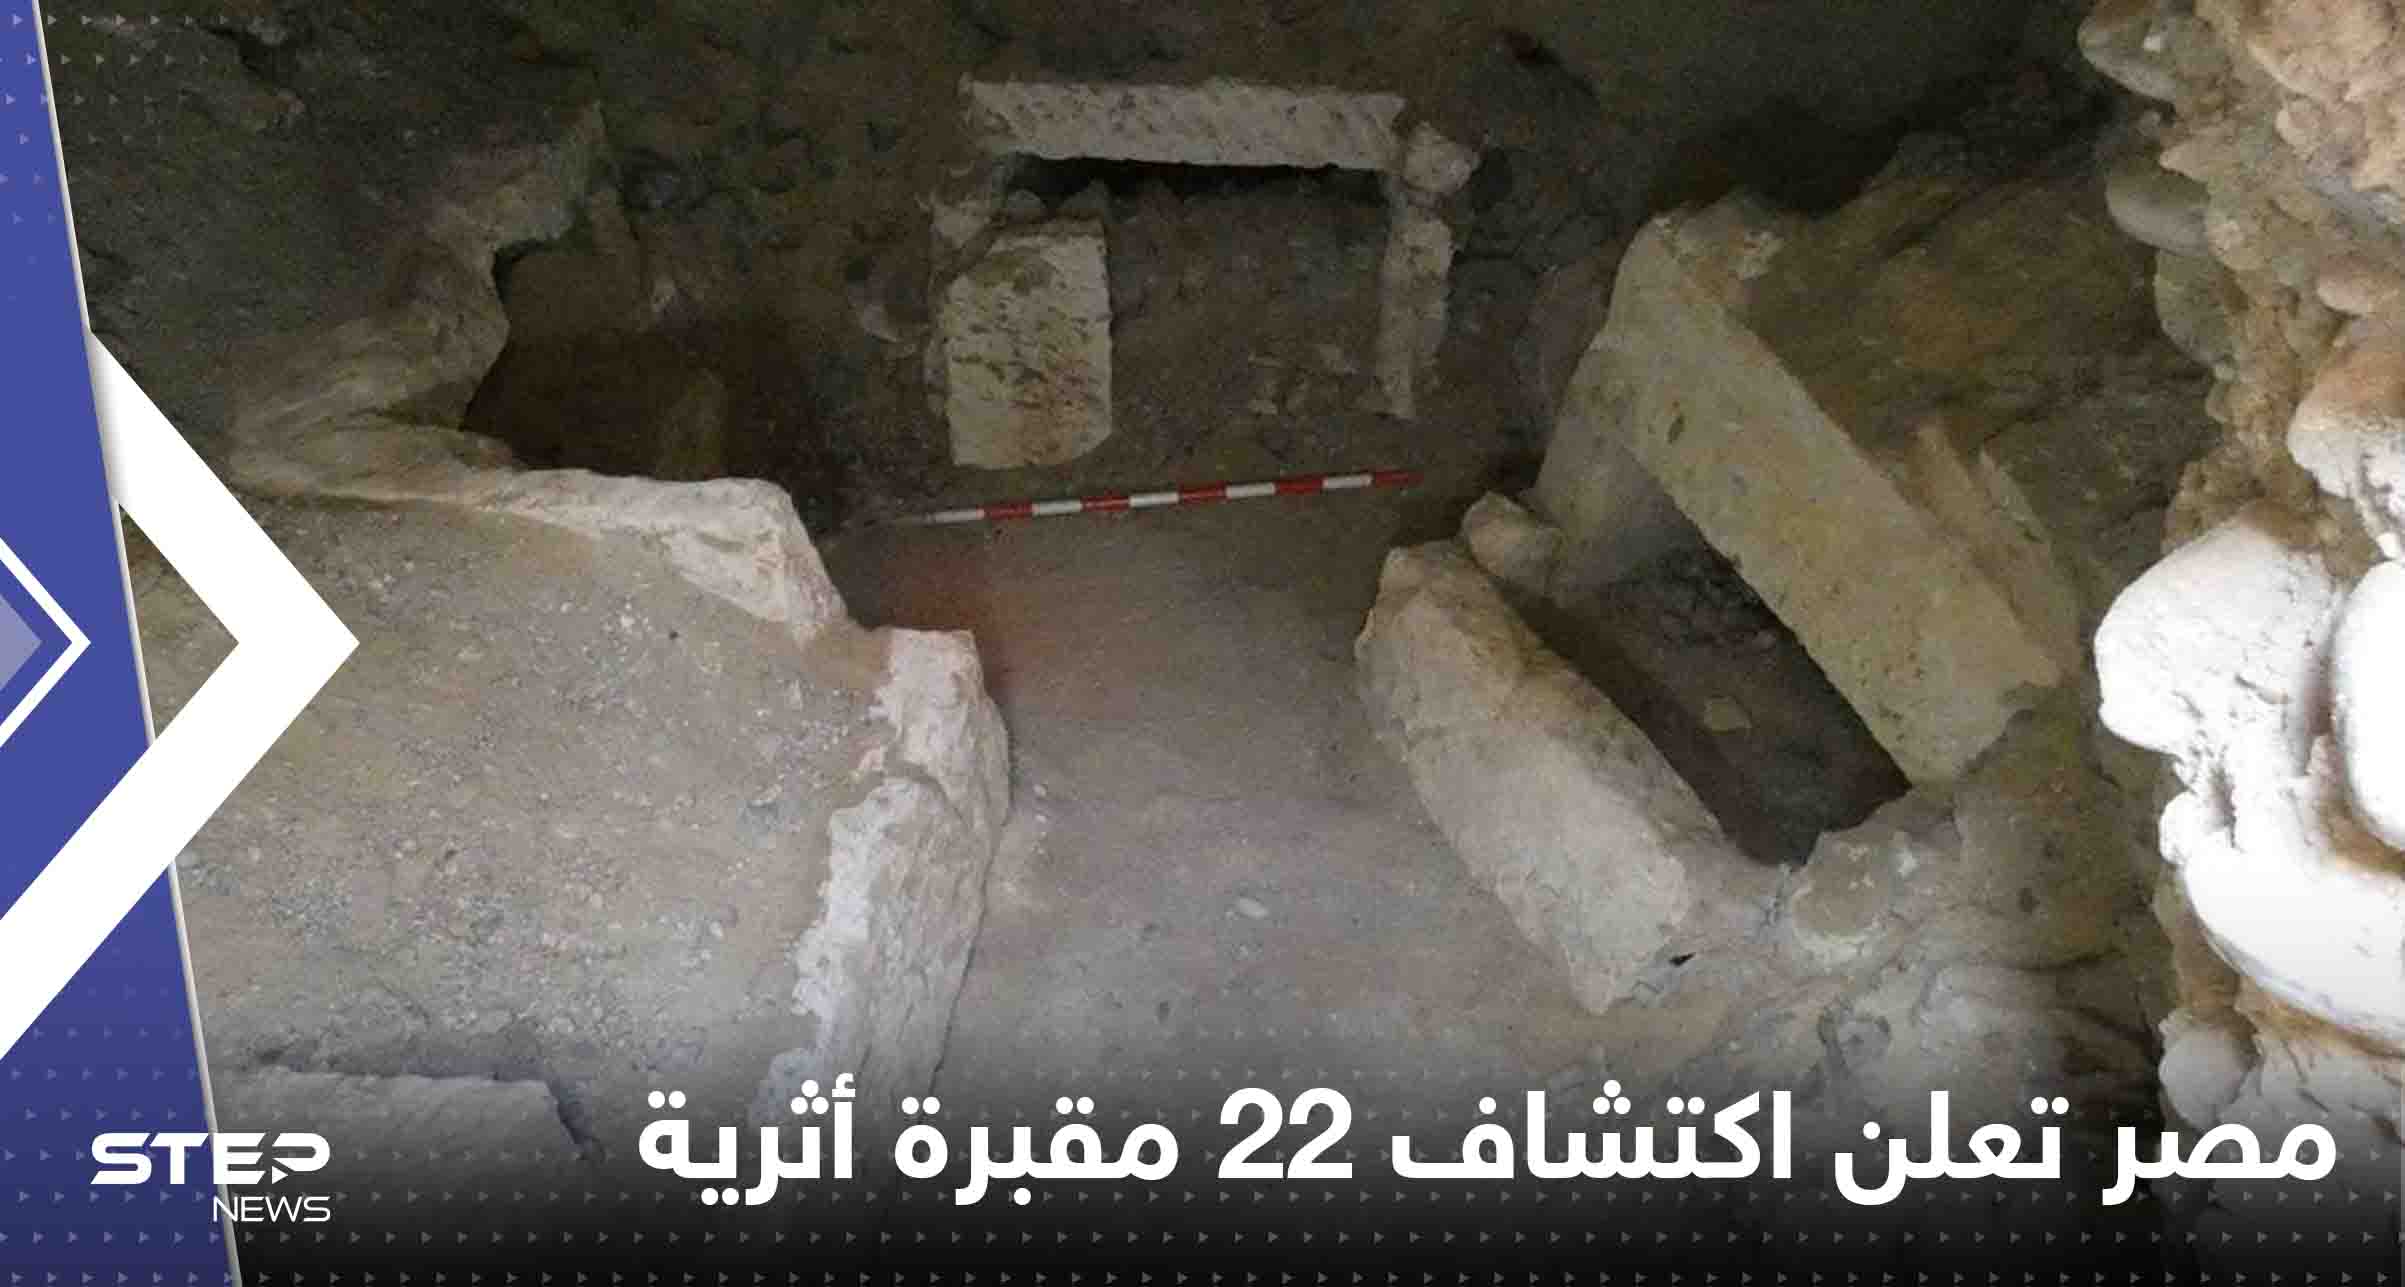 مصر تعلن اكتشاف 22 مقبرة